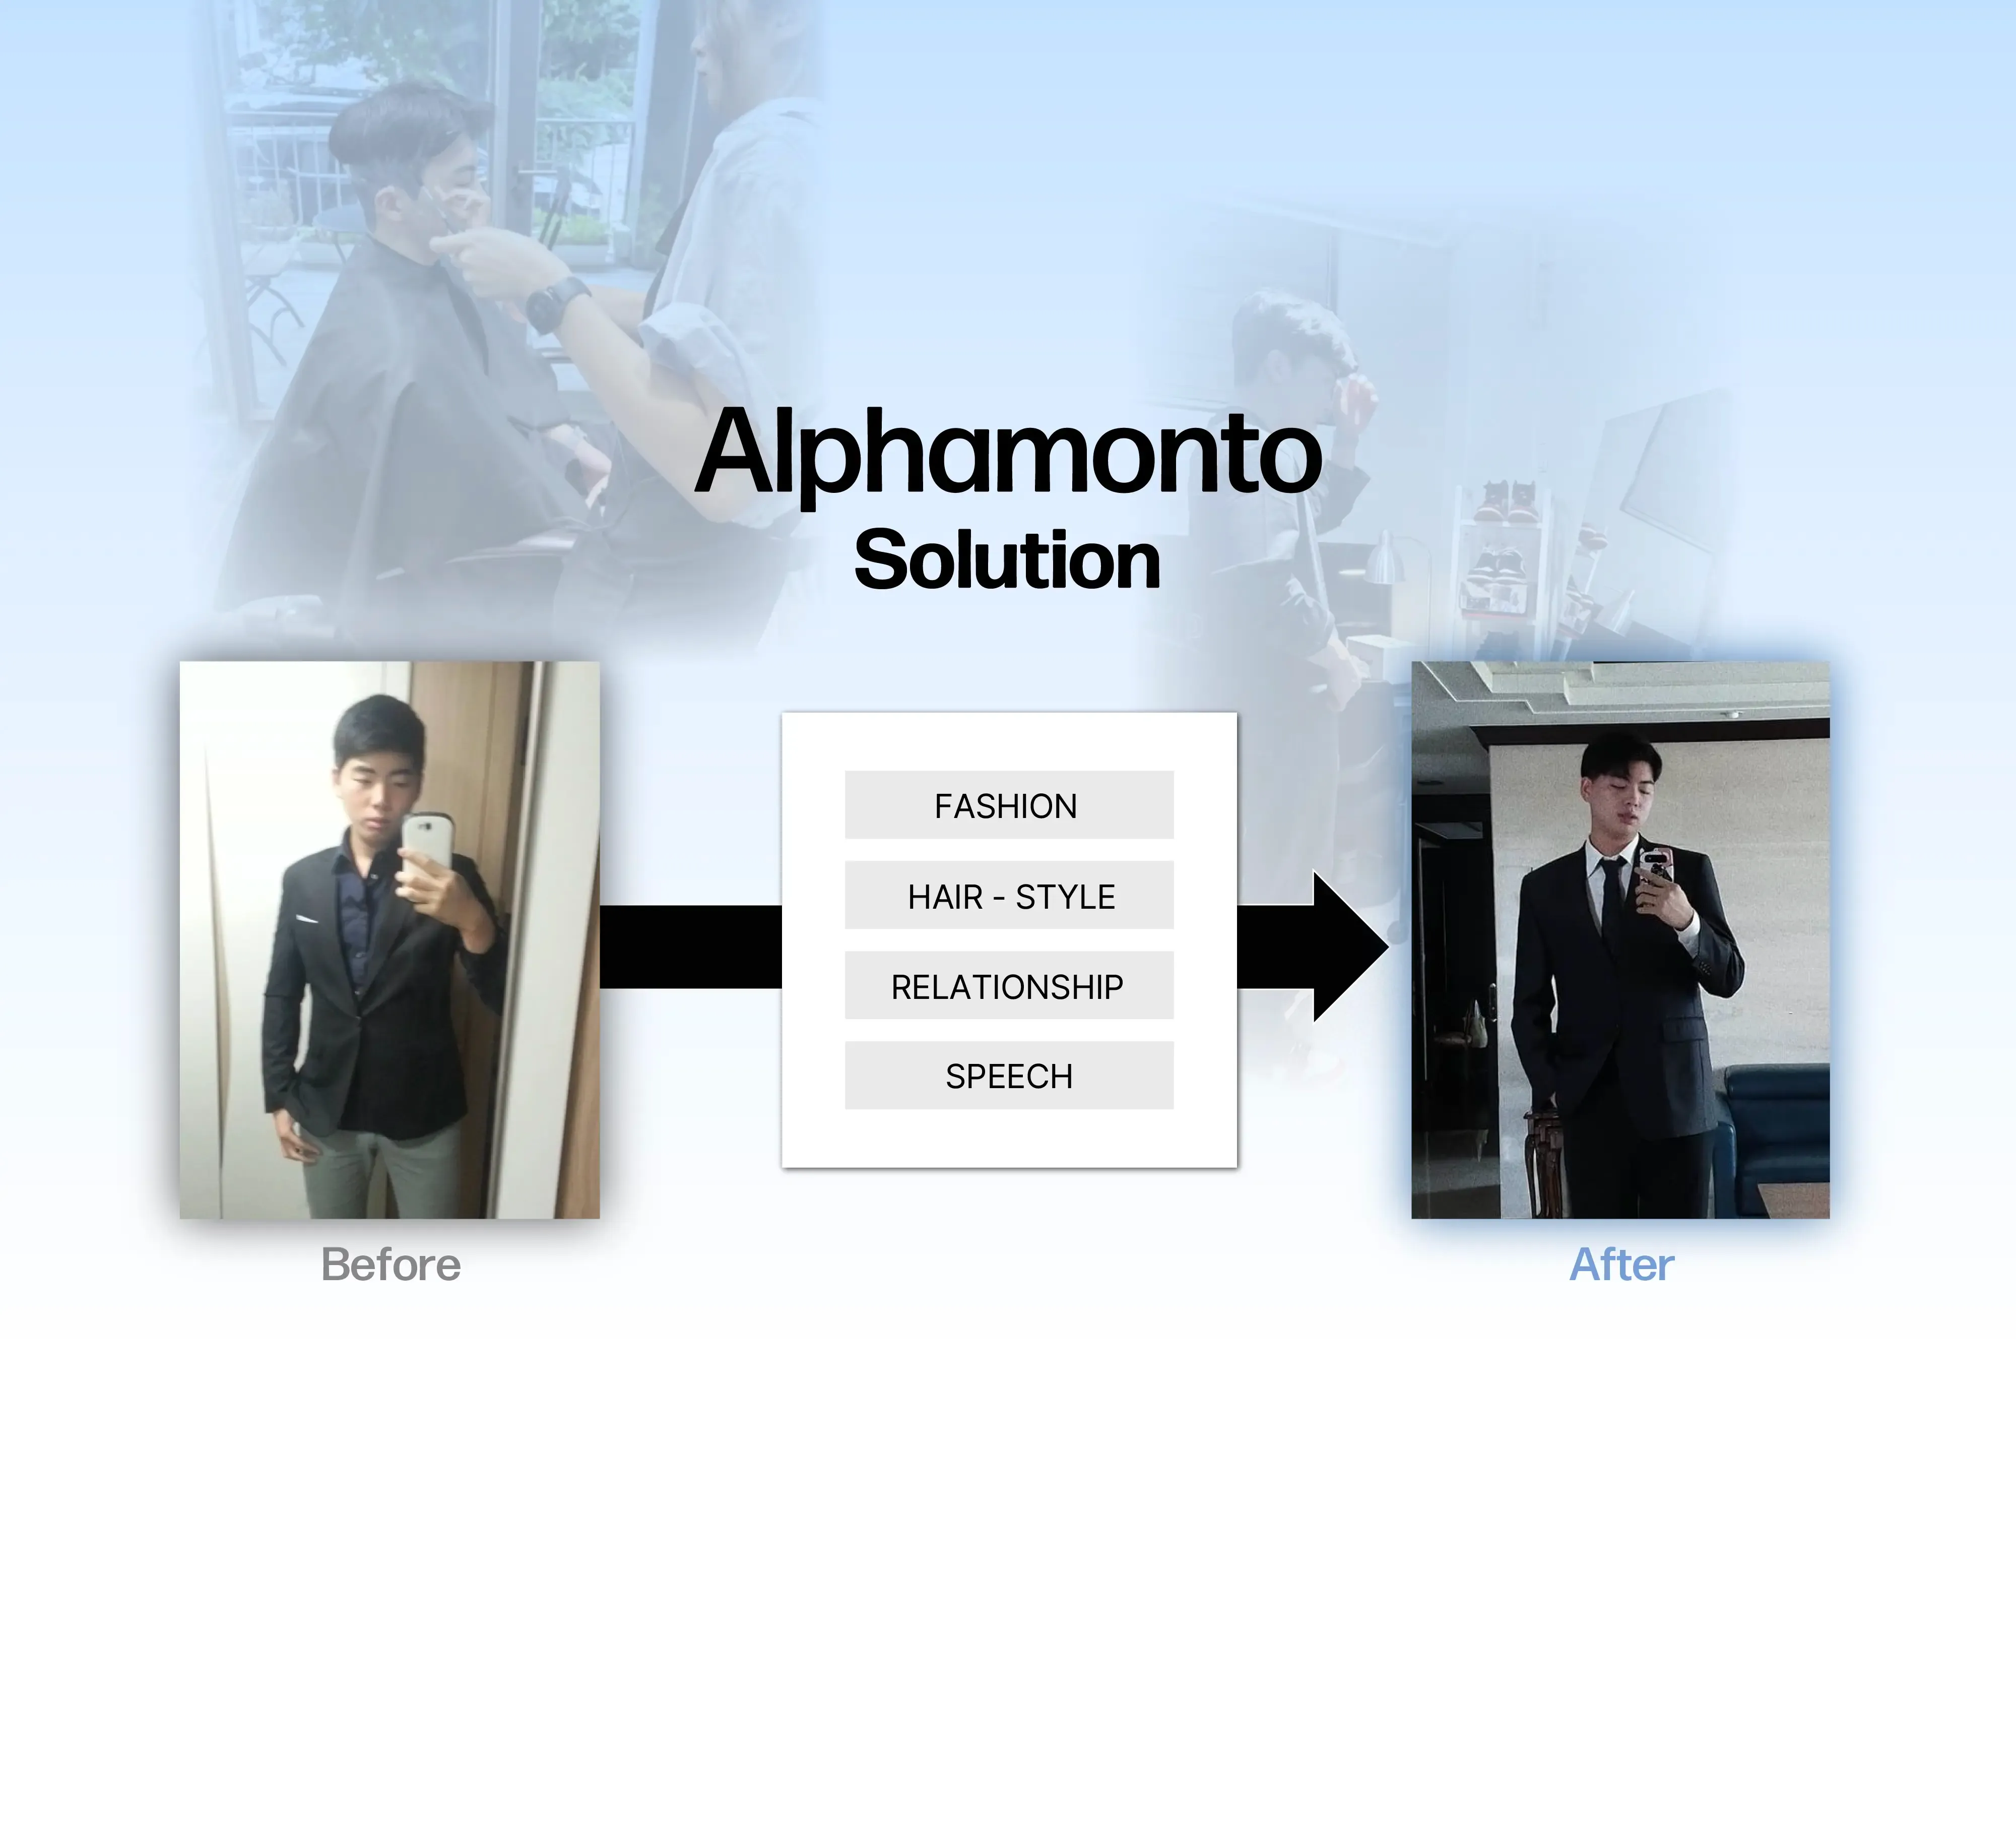 alphamonto solution